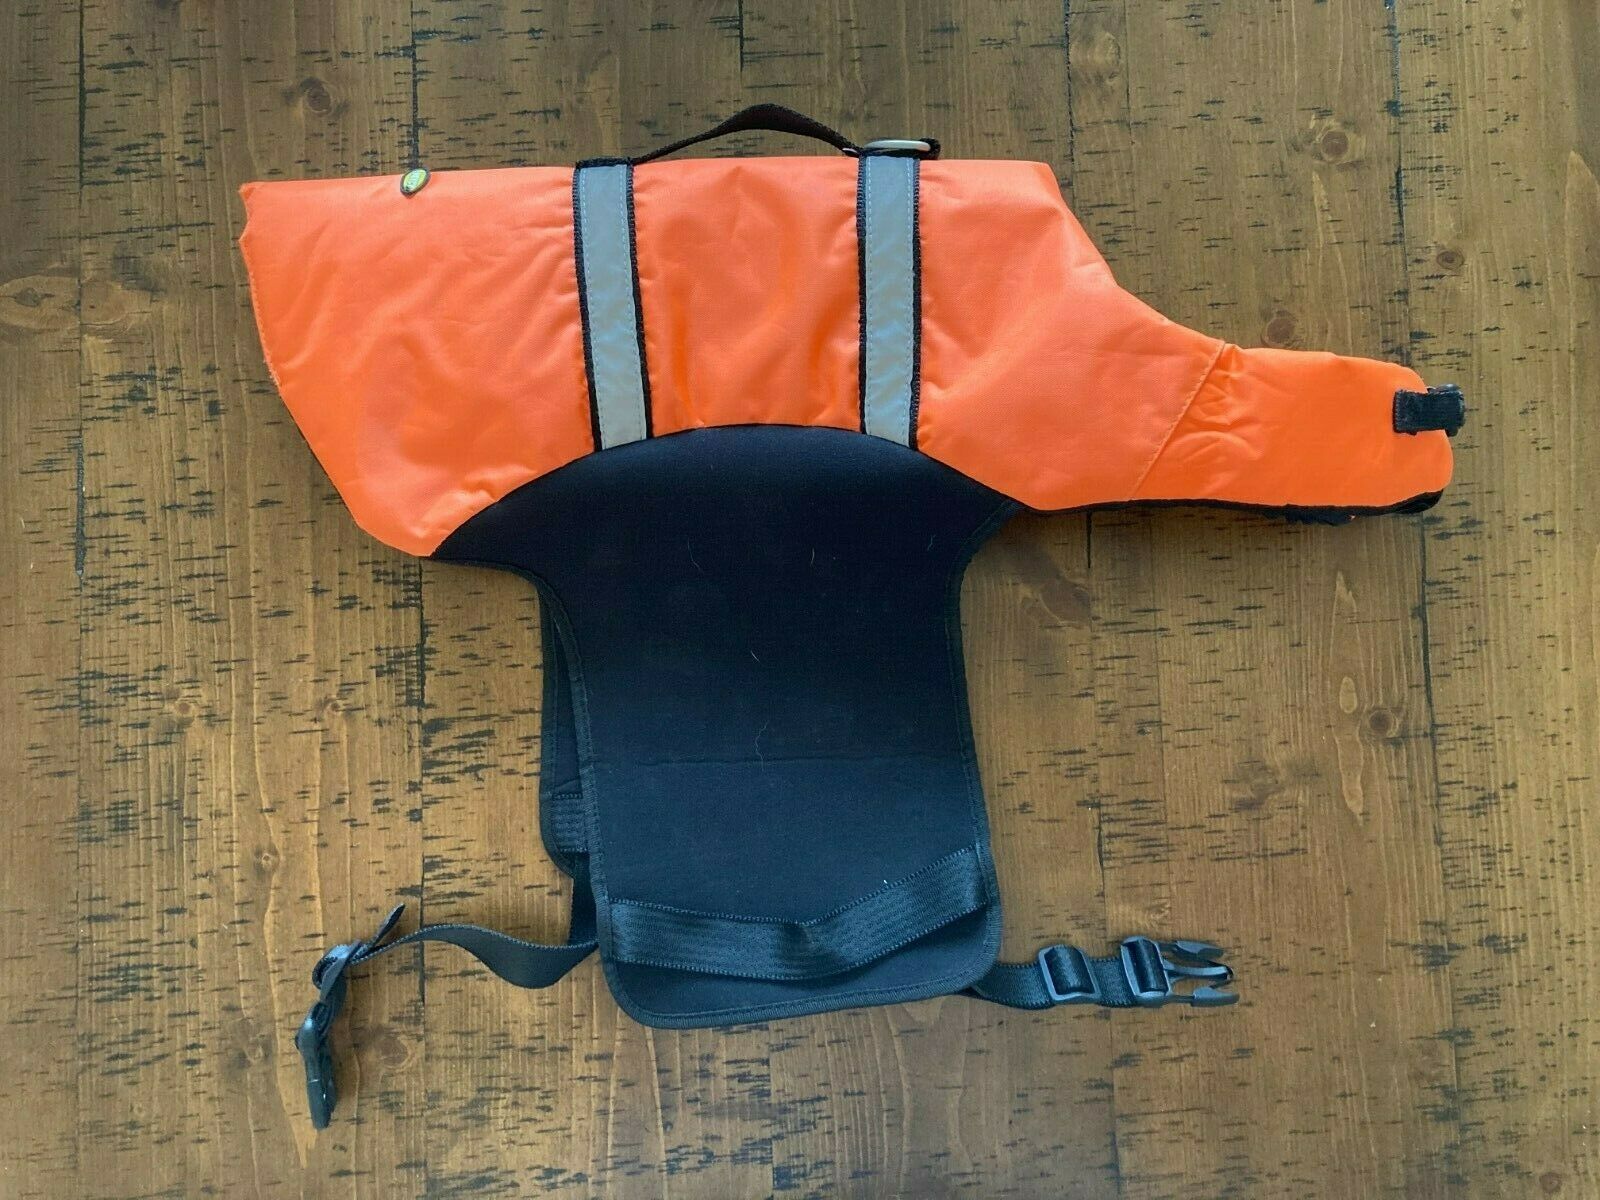 Enrych Large Dog Flotation Life Vest Orange